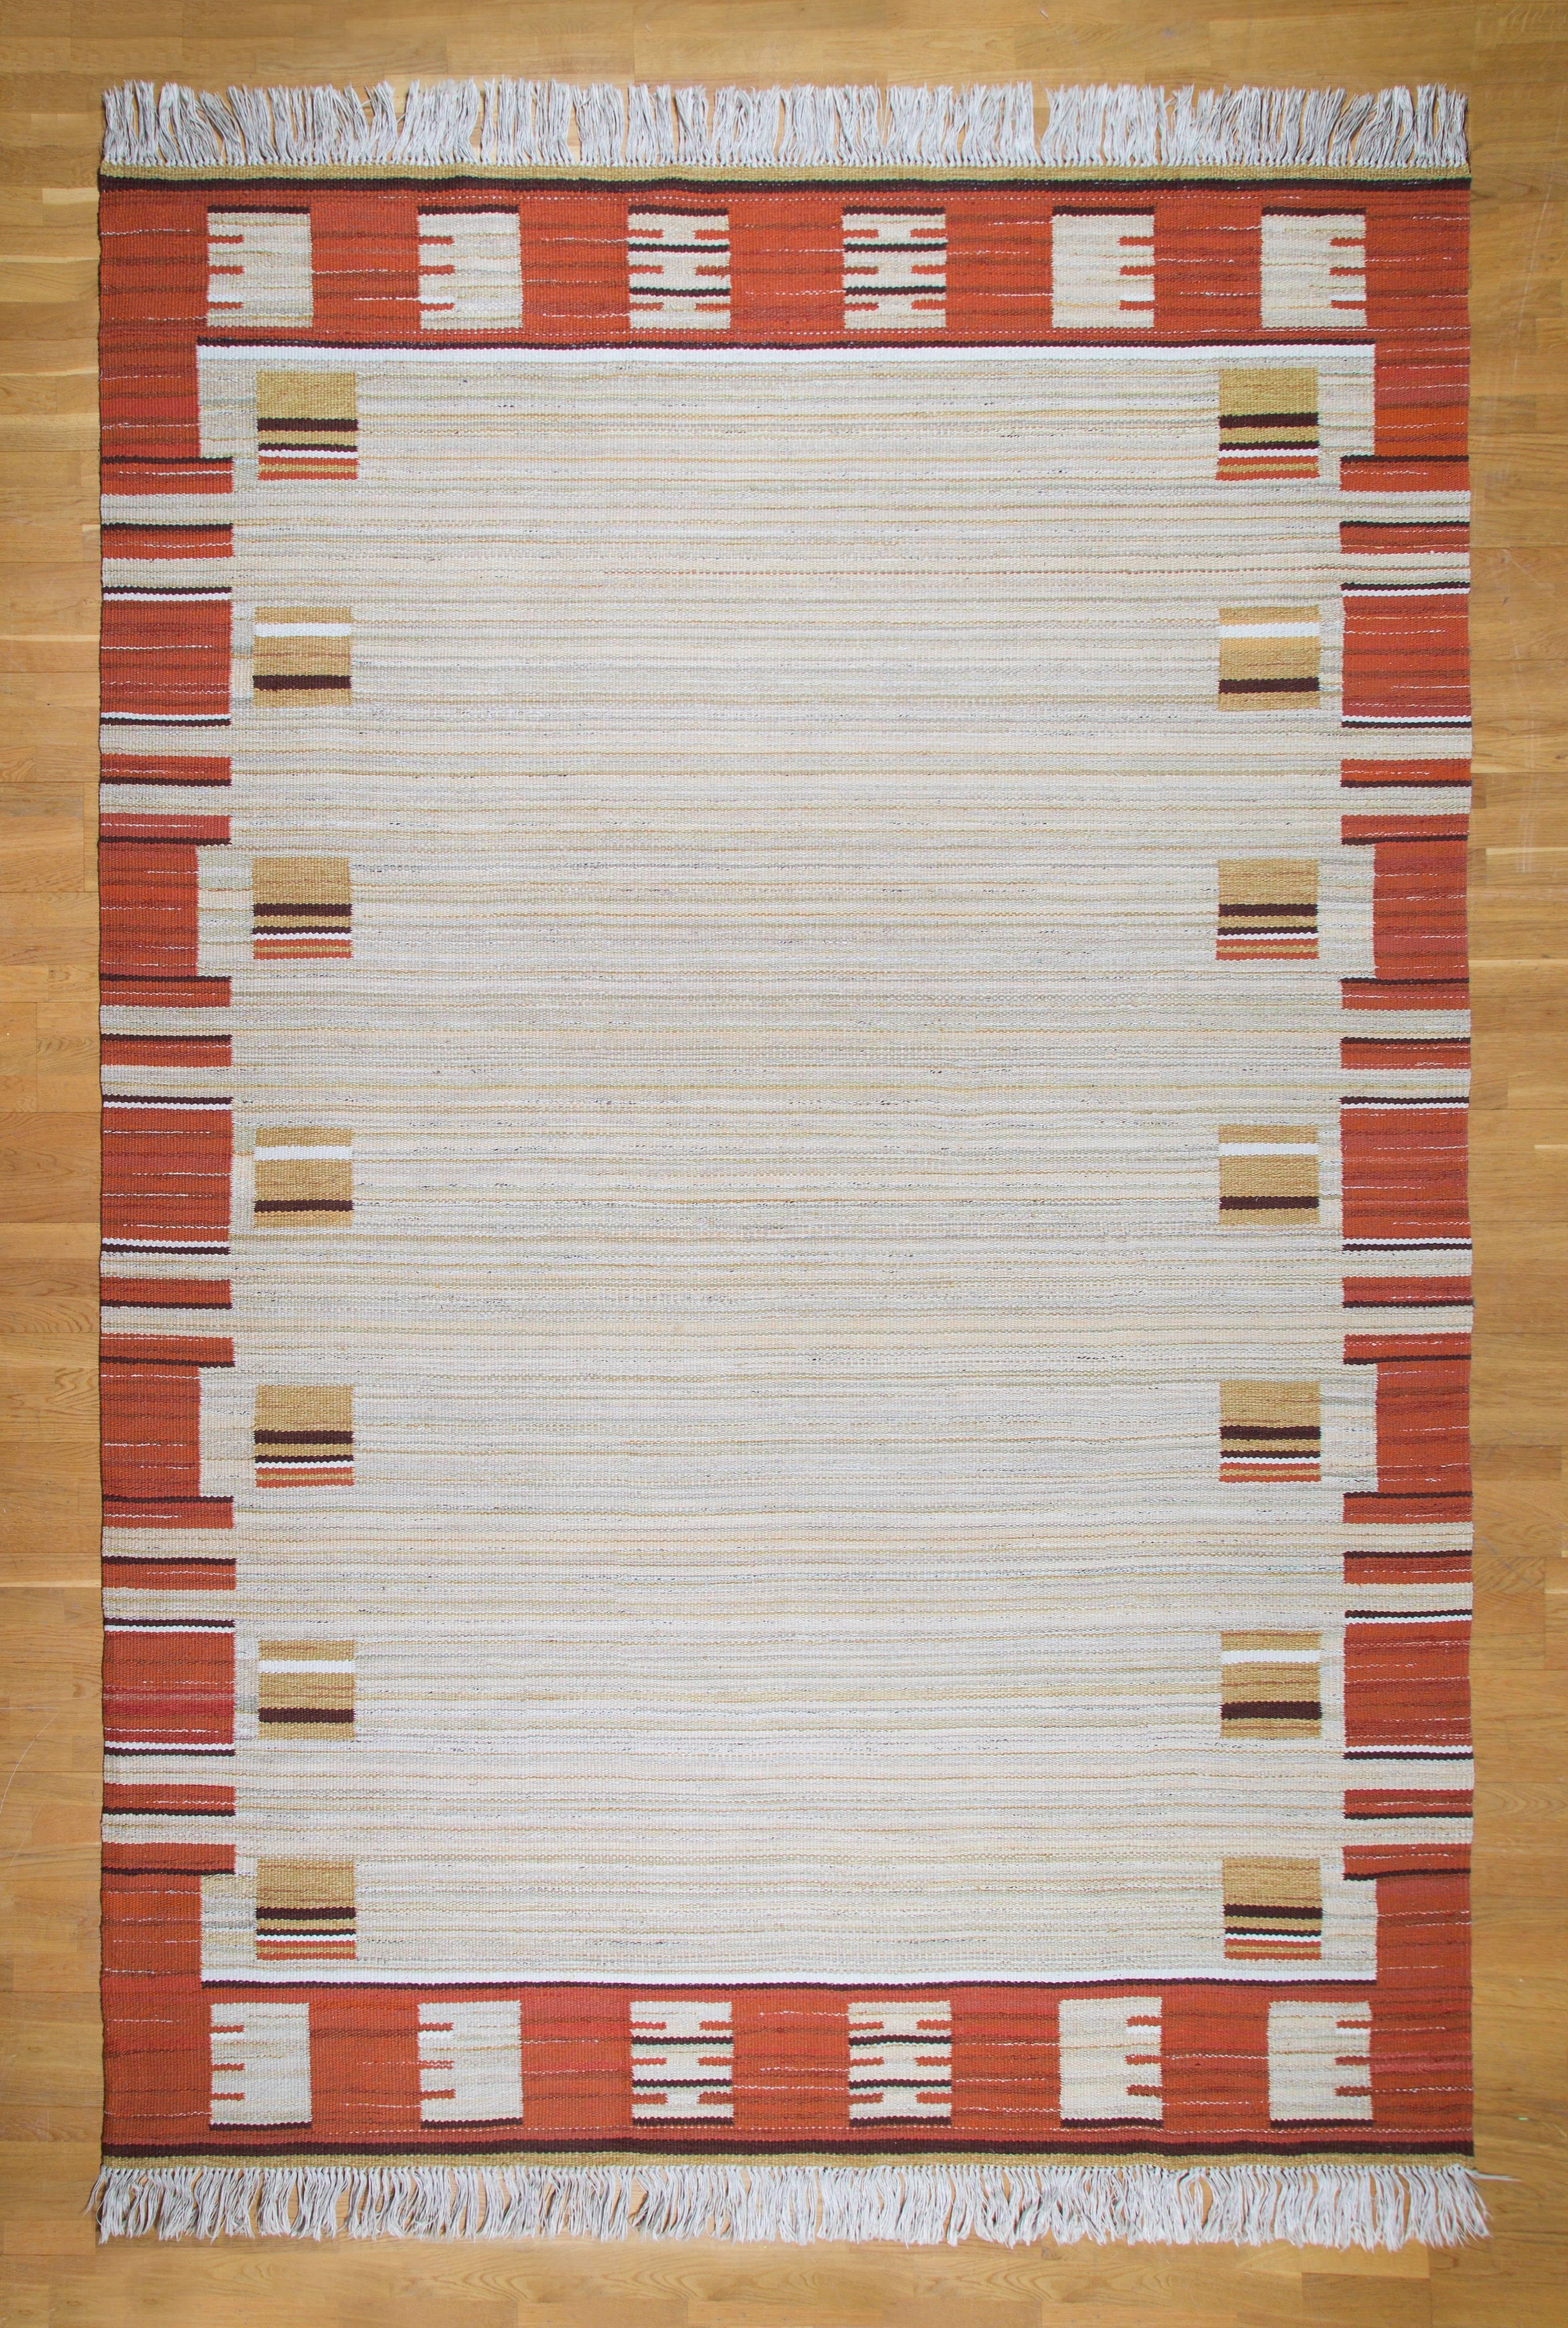 Large Swedish flat-woven Art Deco/modernist rug 

Sweden, 1930s

Handwoven wool
Sienna, beige, red, black, grey

Artist unknown

Measures: 134 L x 86.6 W in
340 L x 220 W cm.